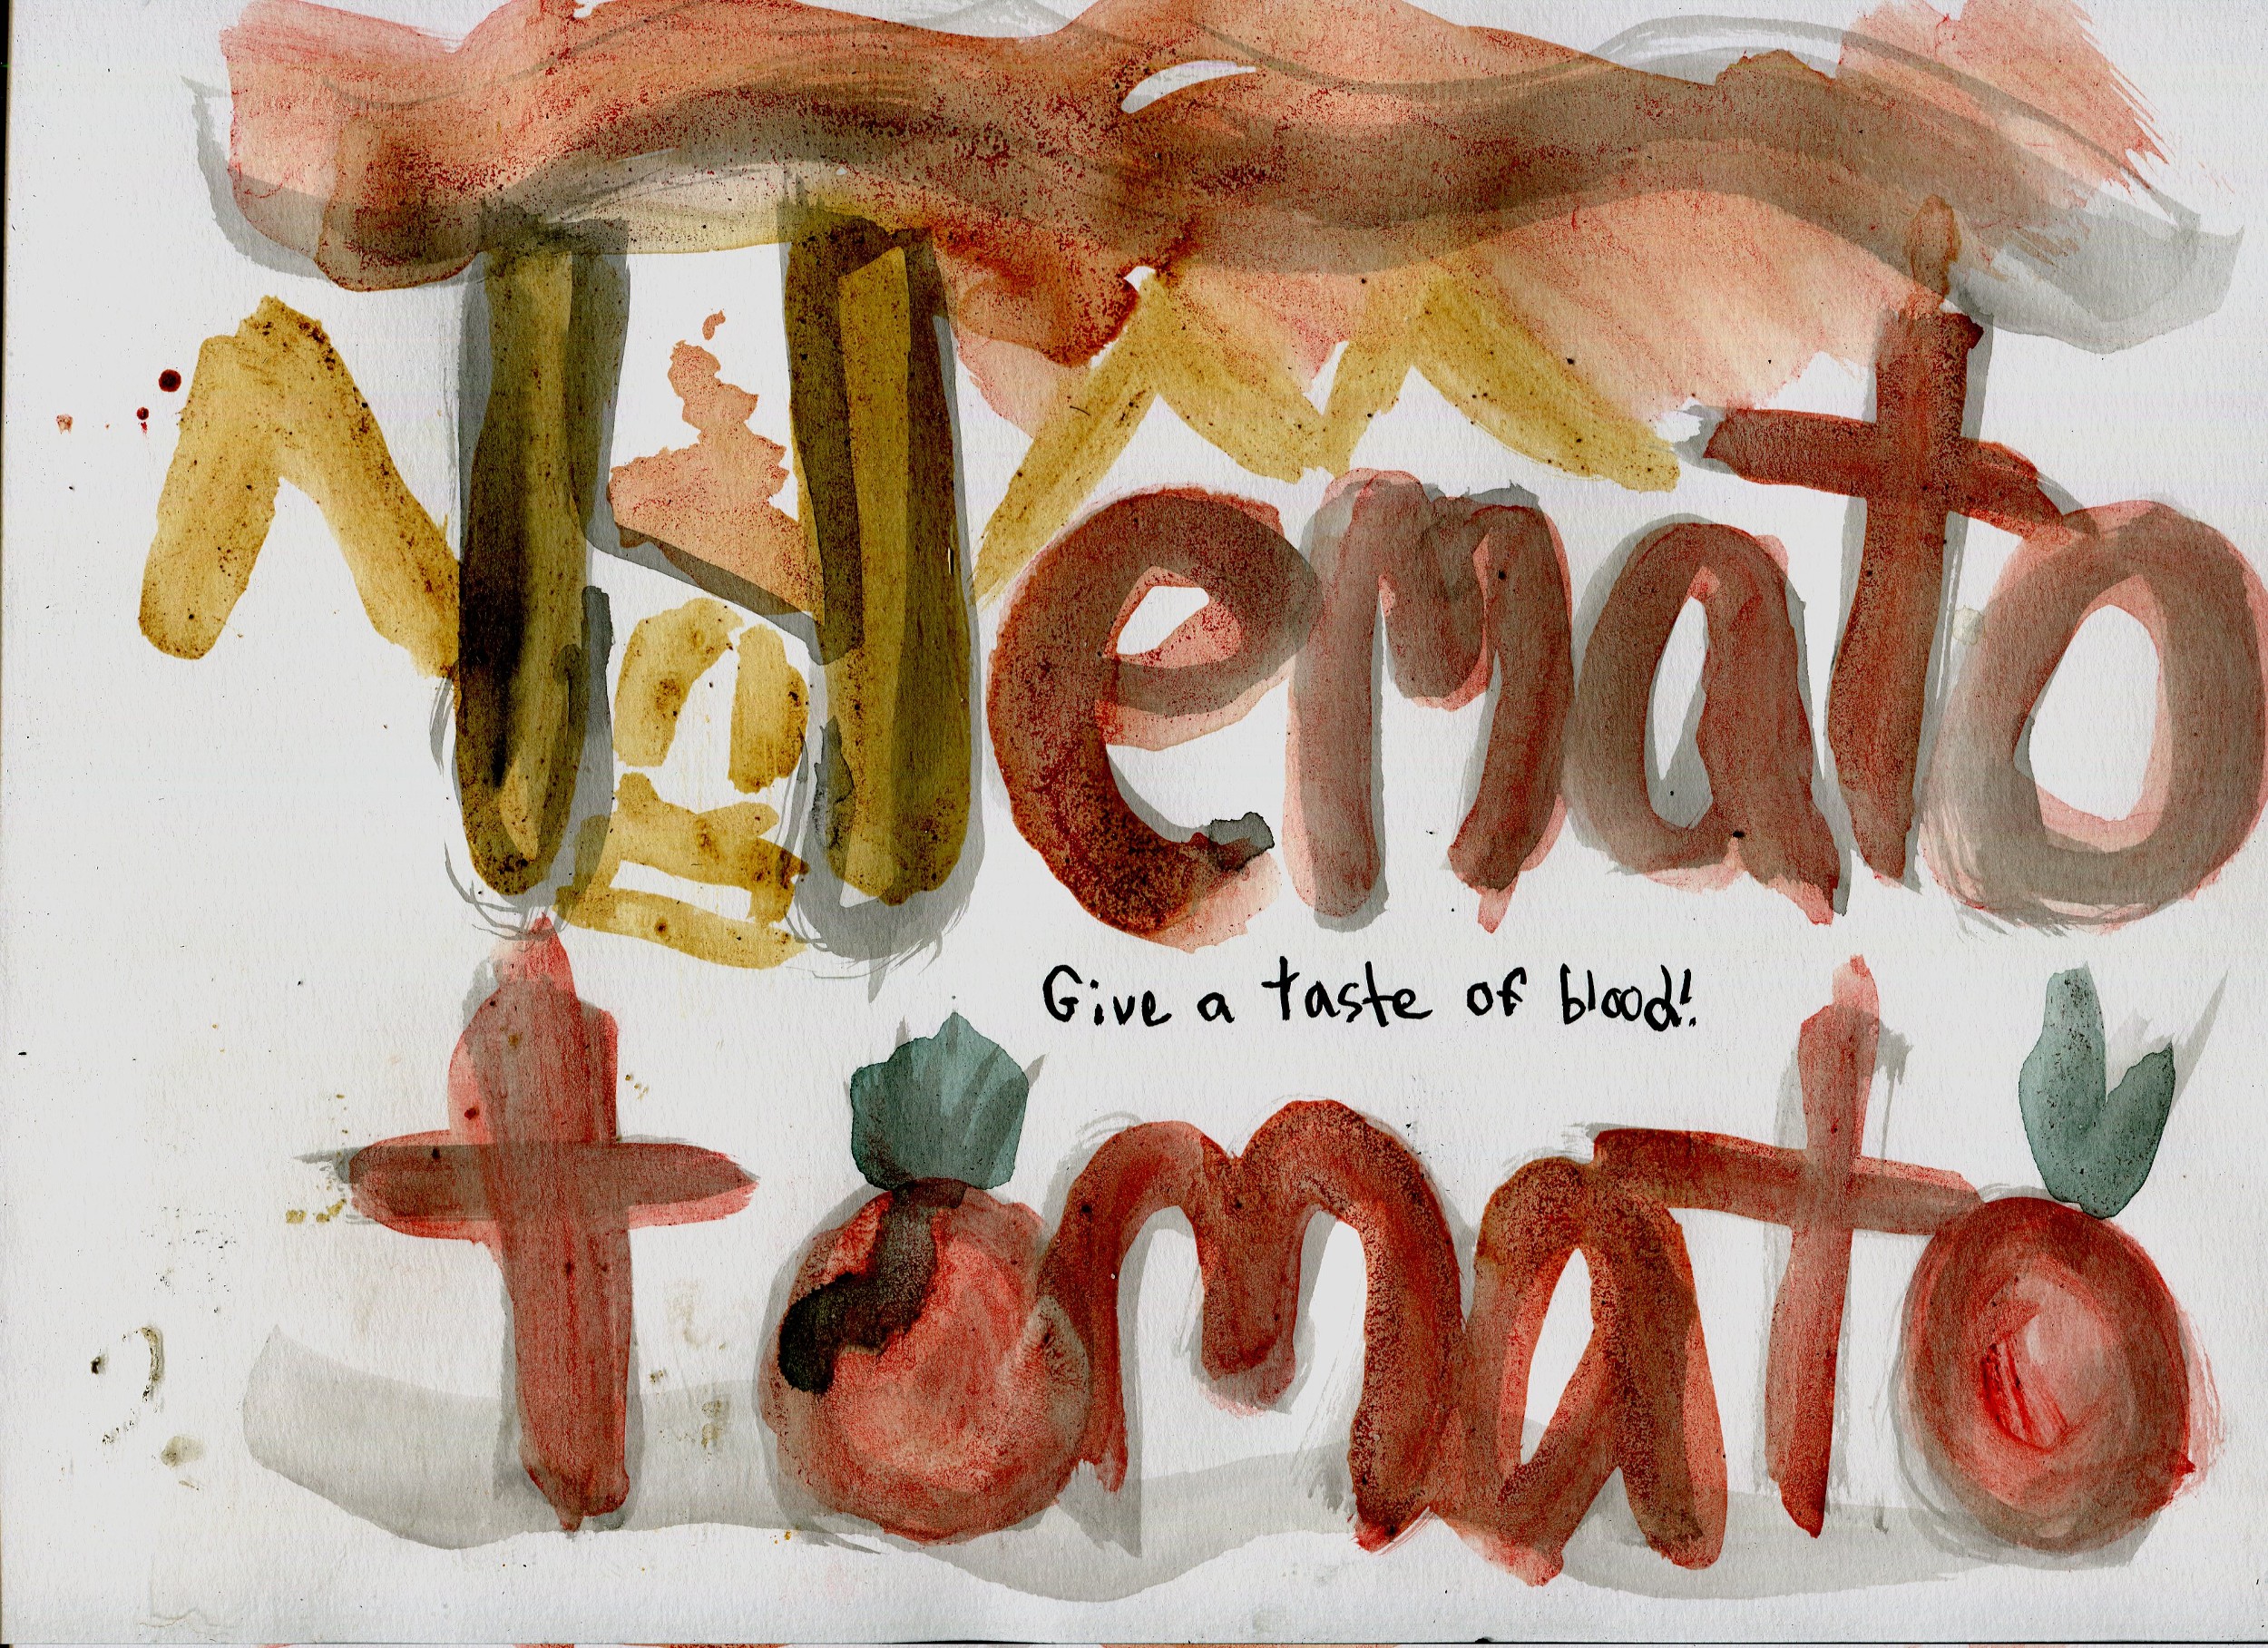 Hemato-Tomato